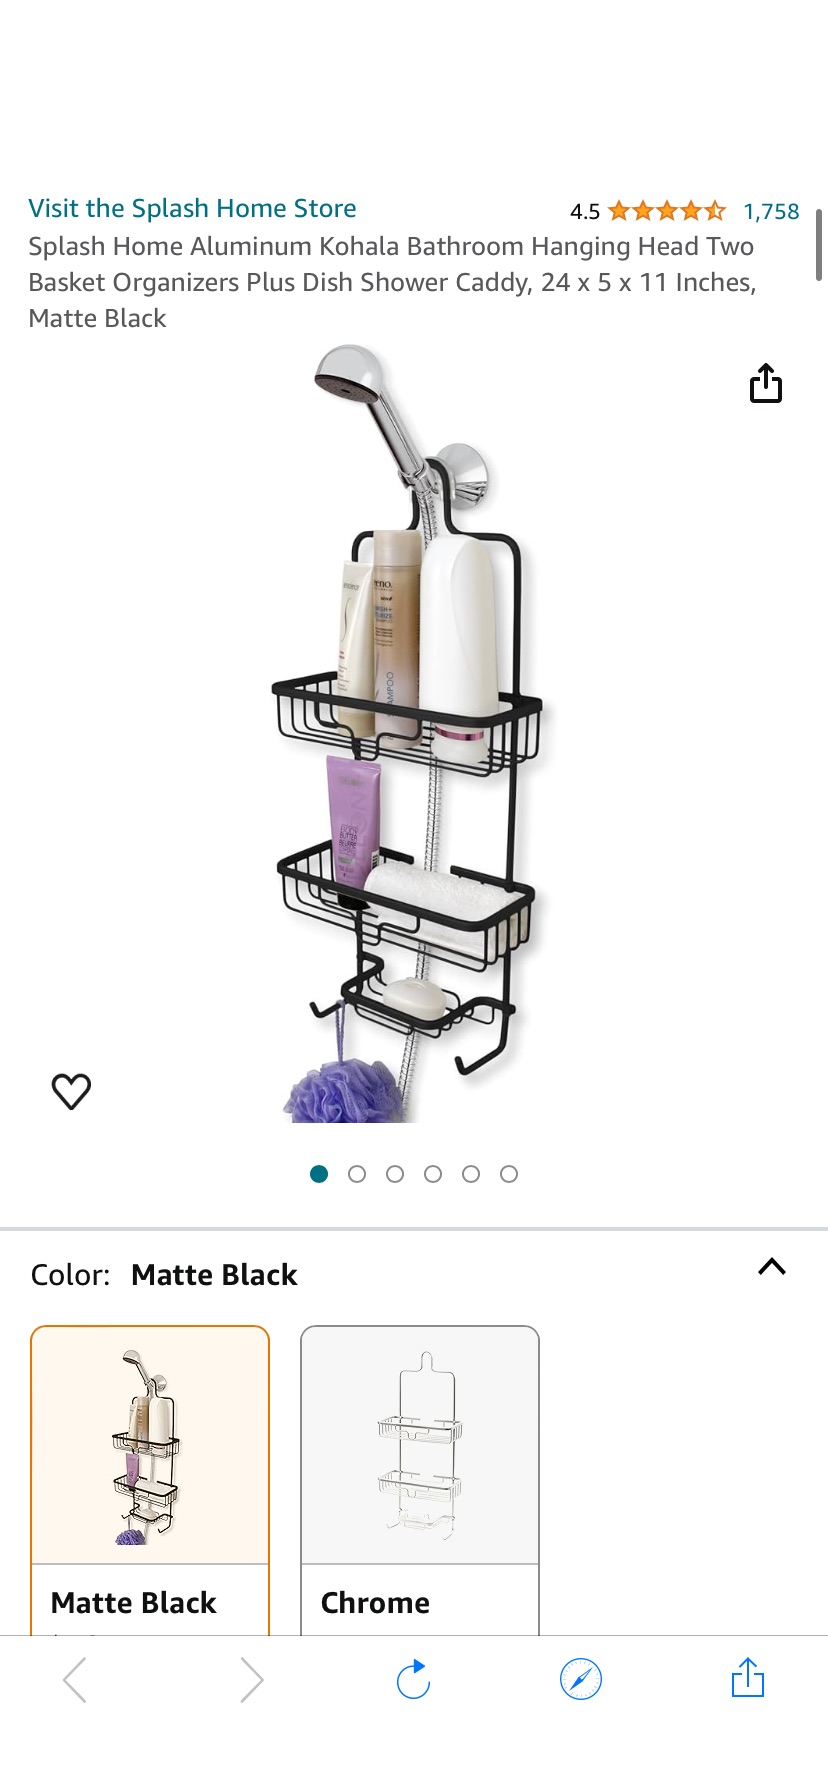 Amazon.com: Splash Home Aluminum Kohala Bathroom Hanging Head Two Basket Organizers Plus Dish Shower Caddy, 24 x 5 x 11 Inches, Matte Black : Home & Kitchen